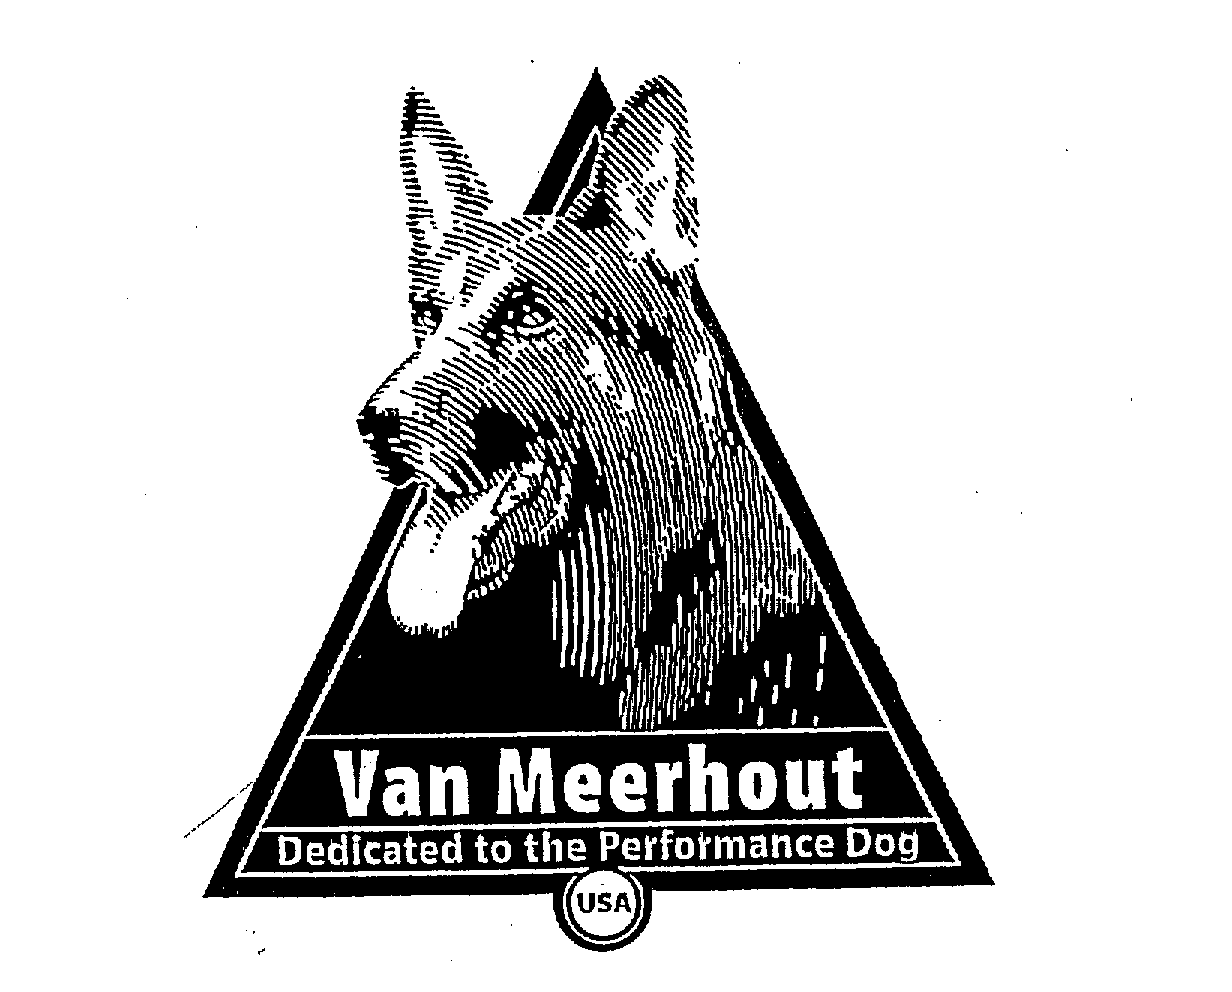  VAN MEERHOUT DEDICATED TO THE PERFORMANCE DOG USA